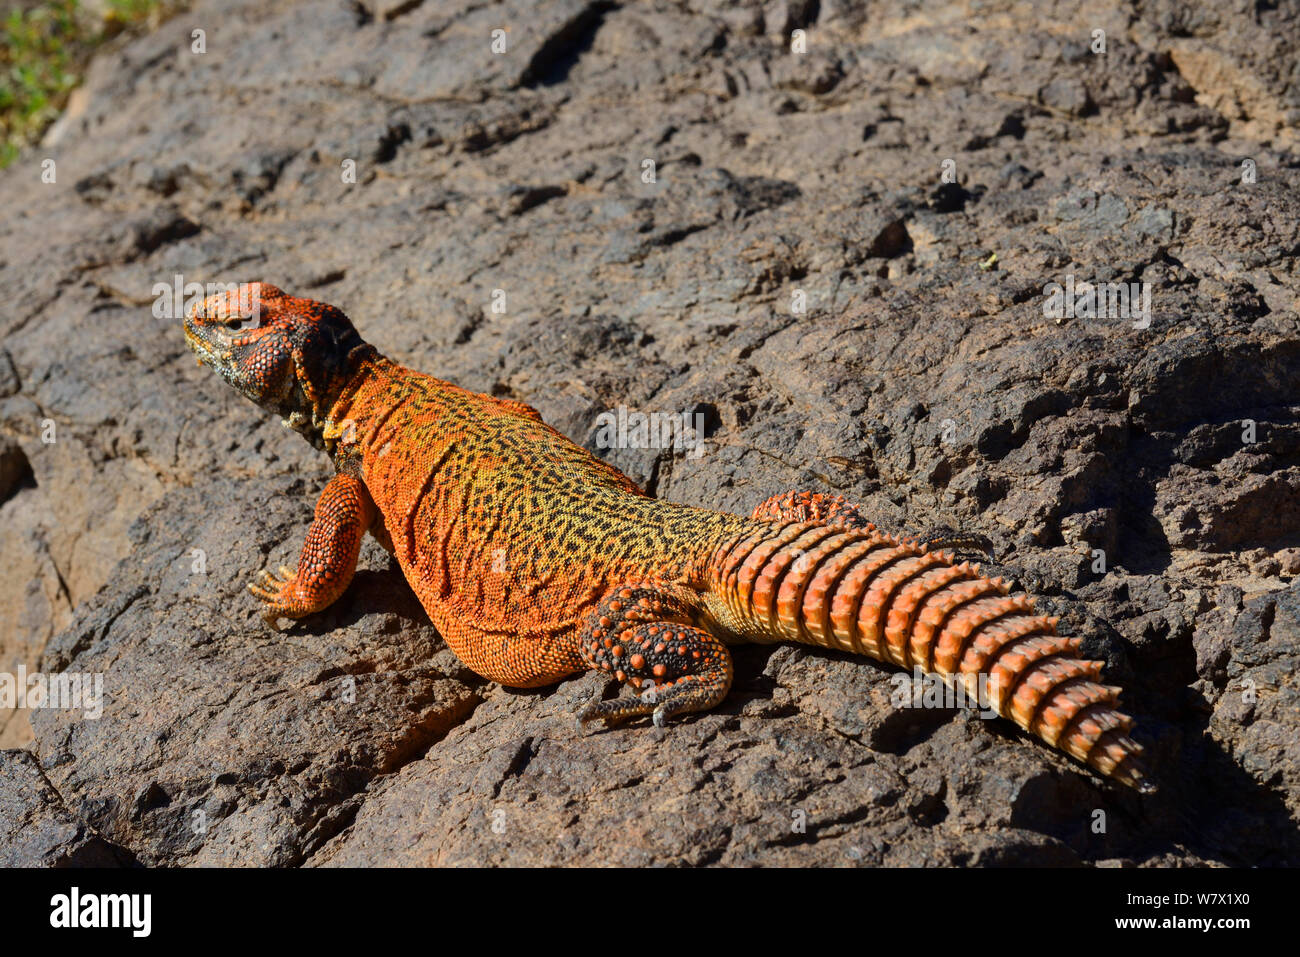 Spiny-tailed lizard (Uromastyx nigriventris) on rocks, near Ouarzazate, Morocco. Stock Photo